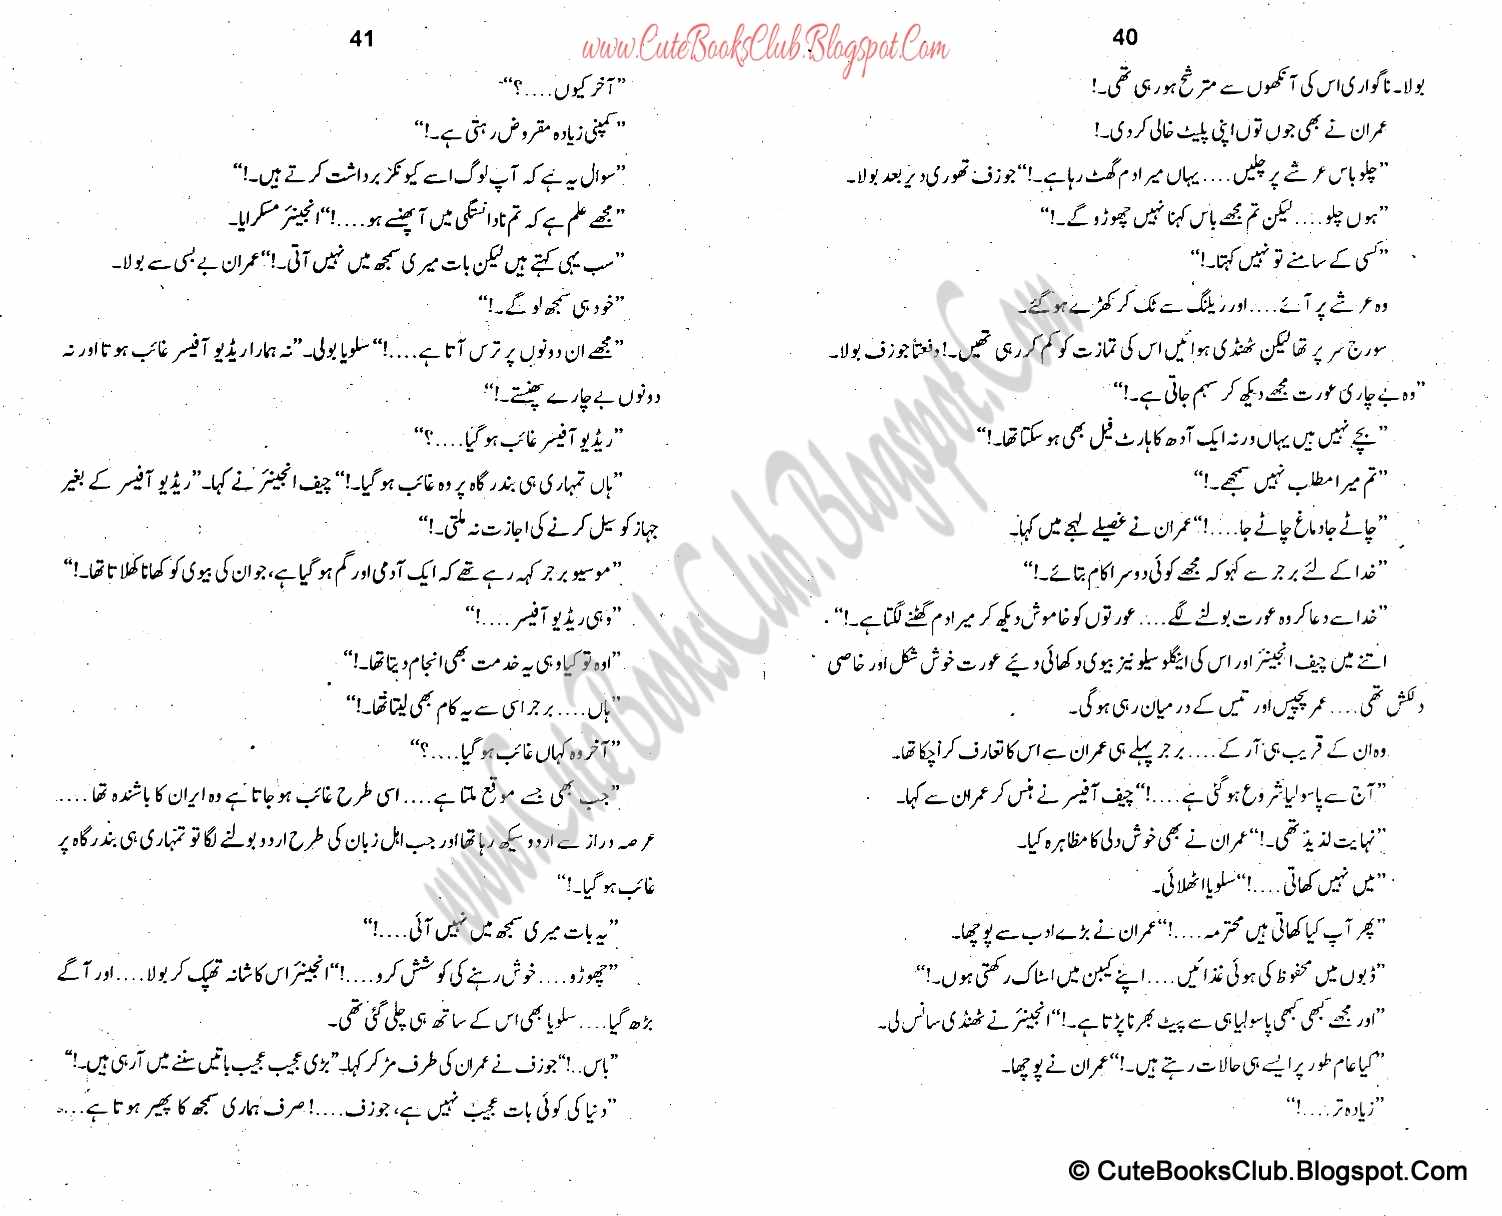 057-Behri Yateem Khana, Imran Series By Ibne Safi (Urdu Novel)